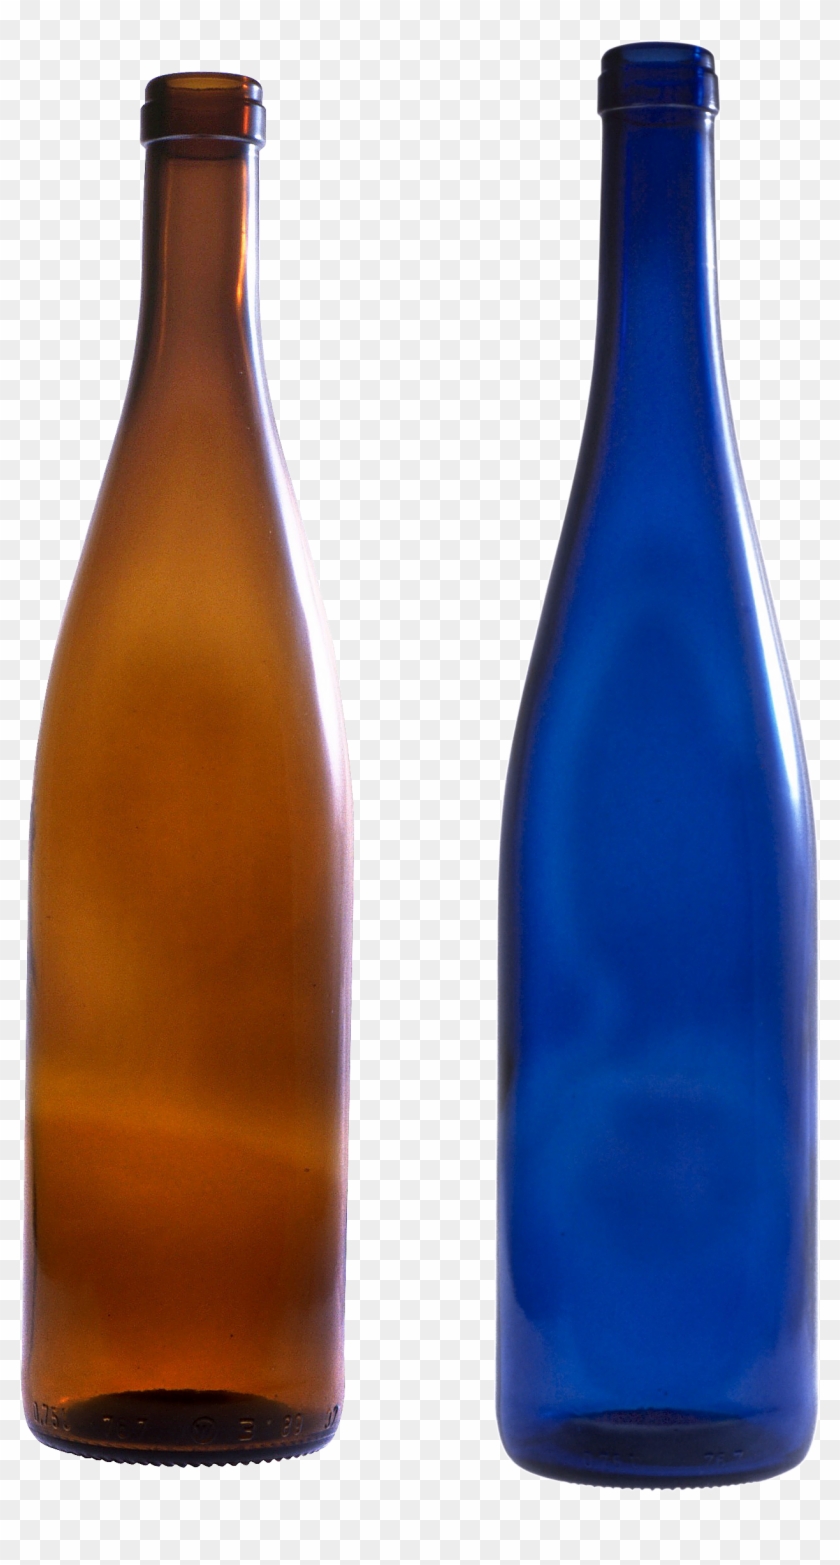 Beer Bottle Clip Art - Empty Glass Bottle Png #11894